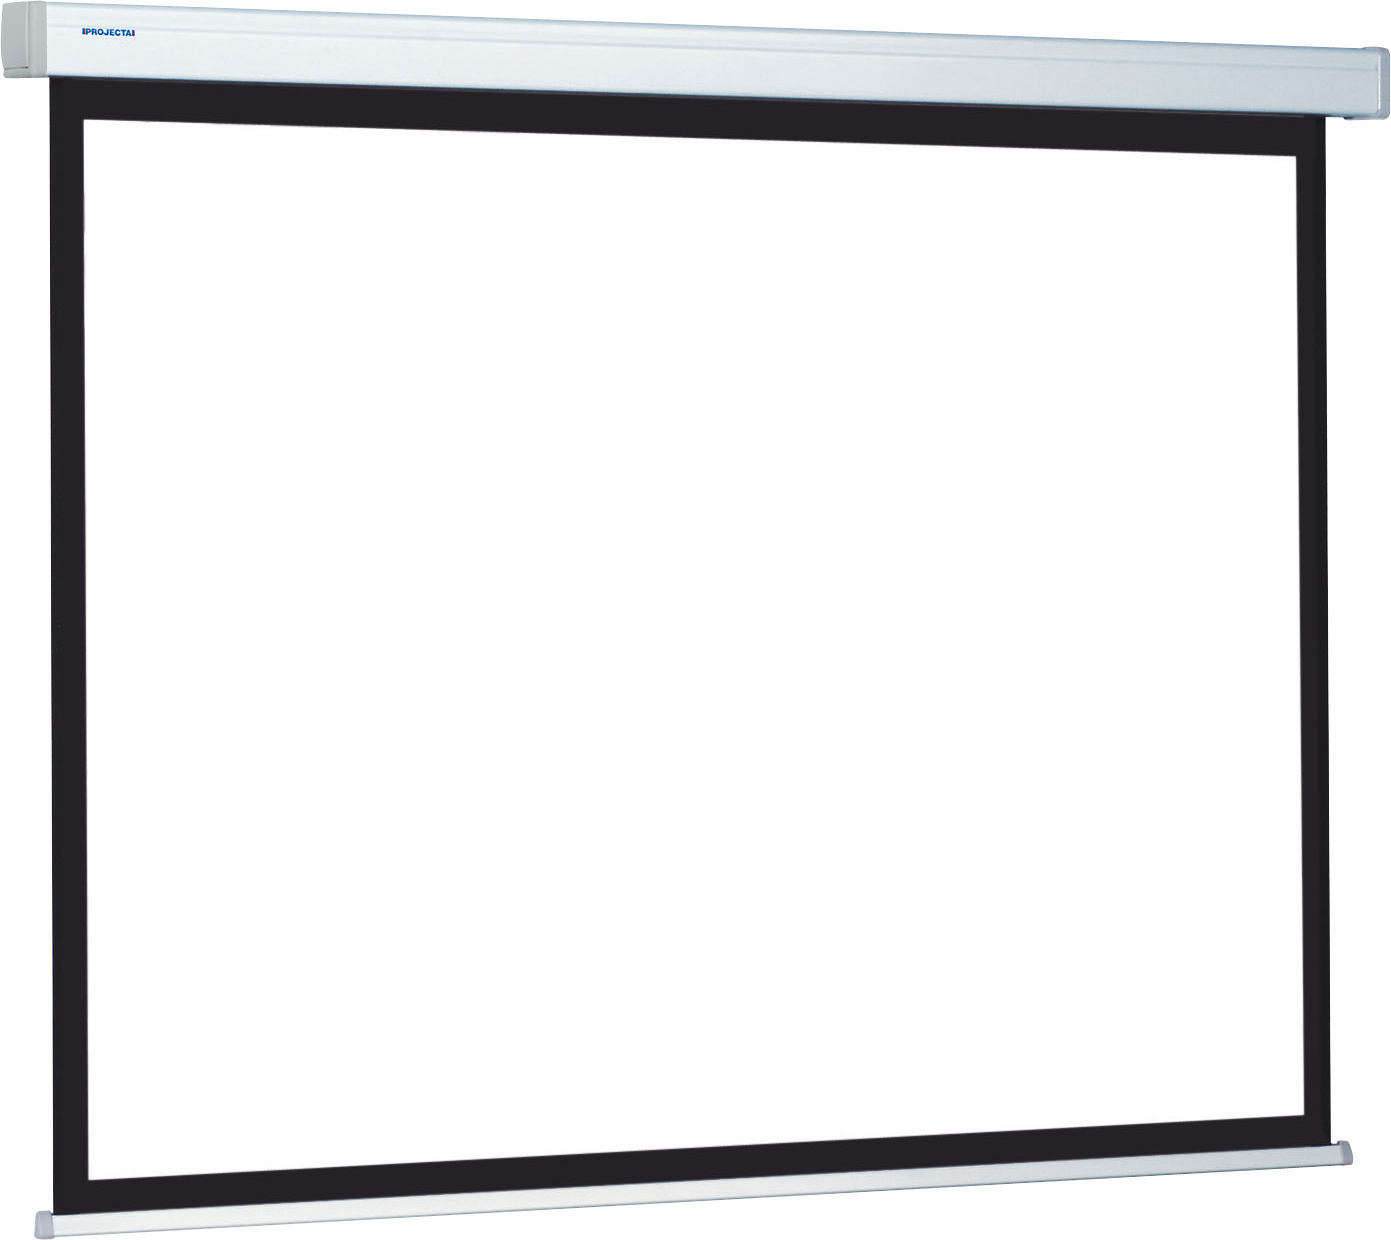 Projecta ProScreen HDTV Format